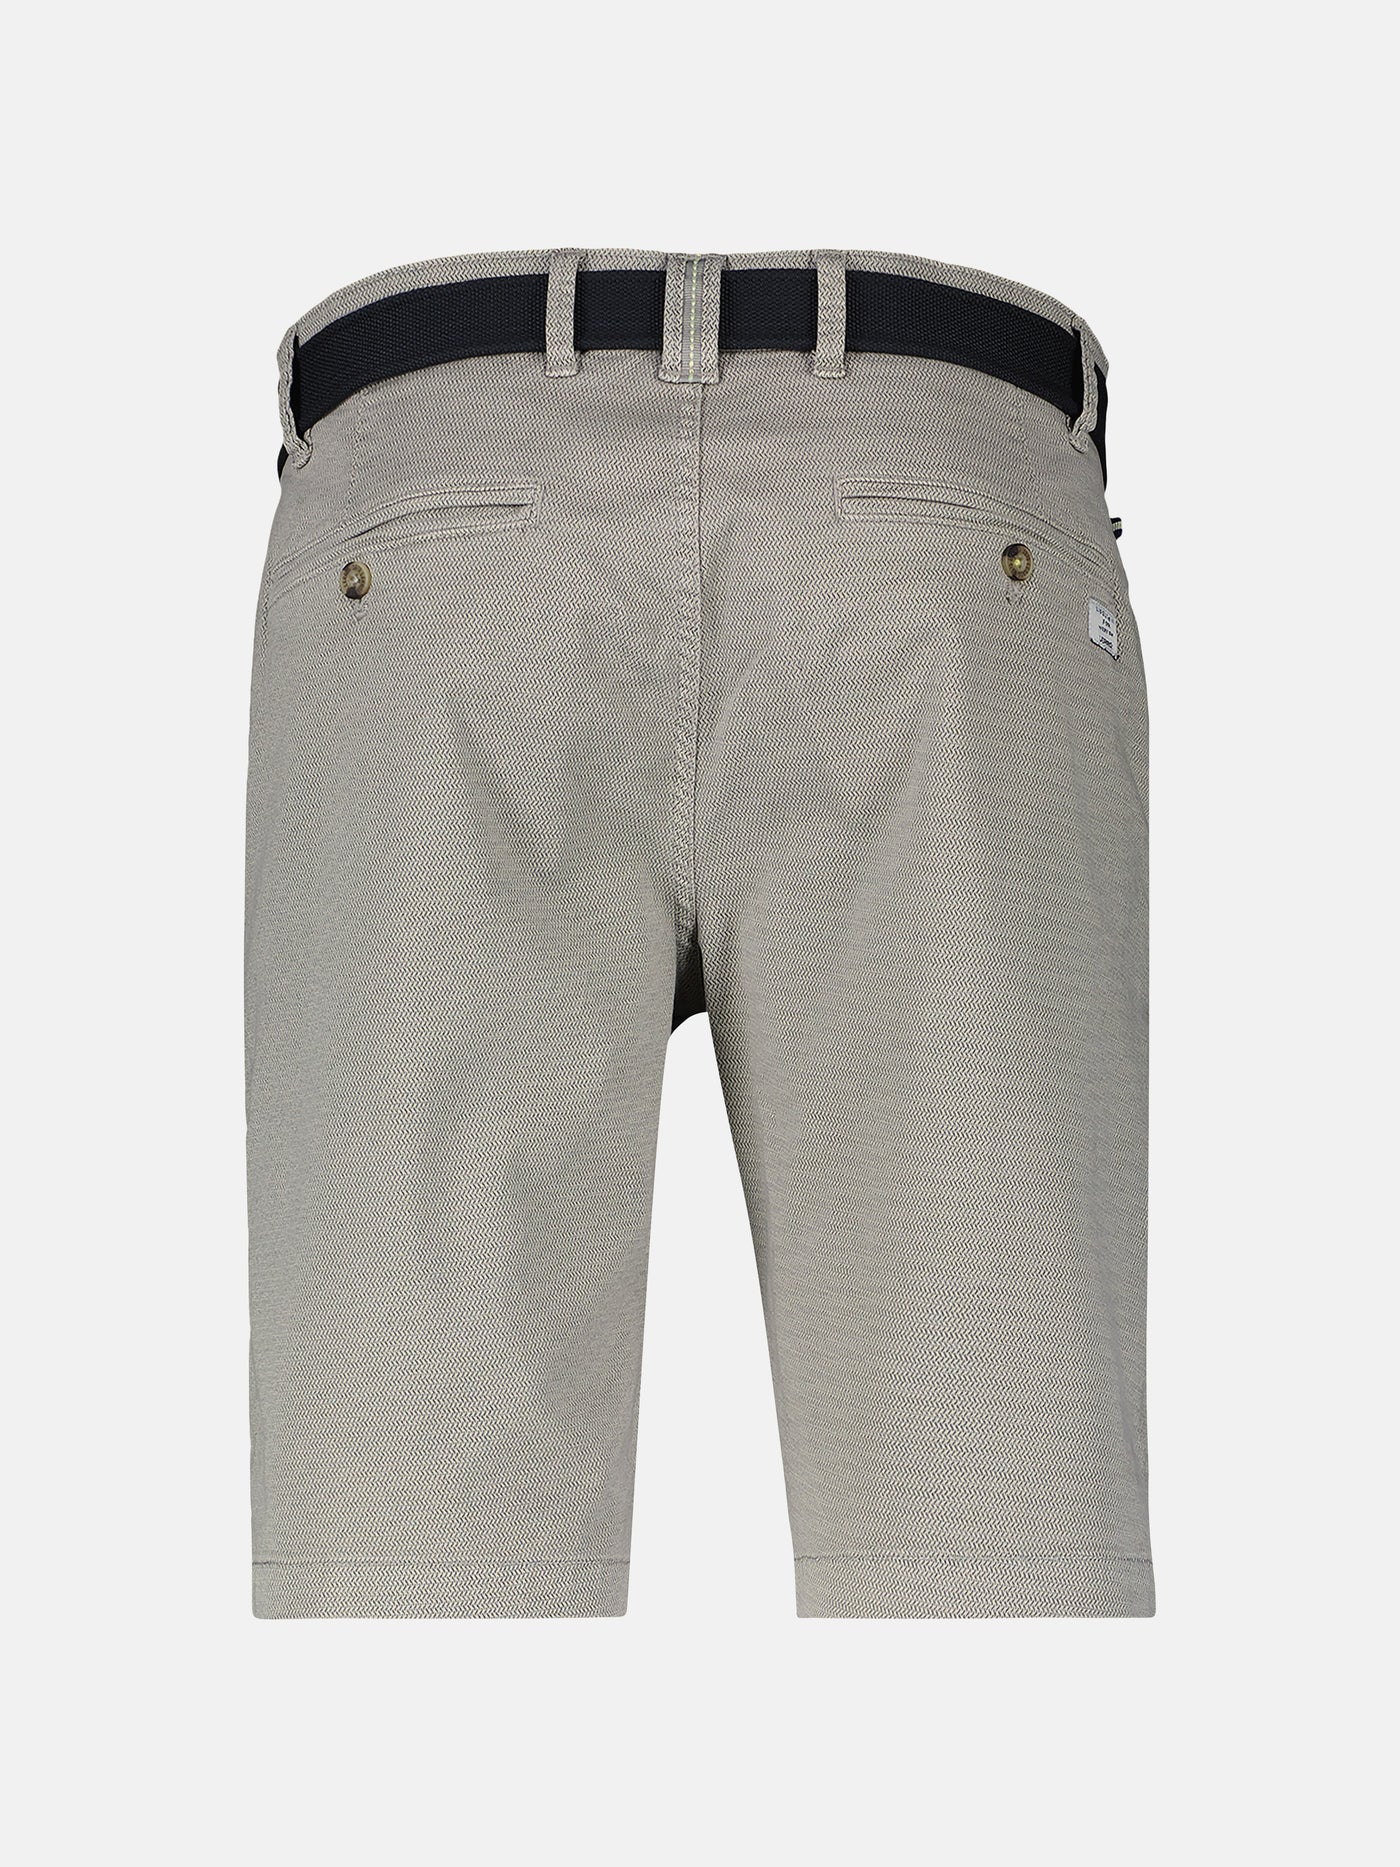 Chino Bermuda shorts, minimal all-over print